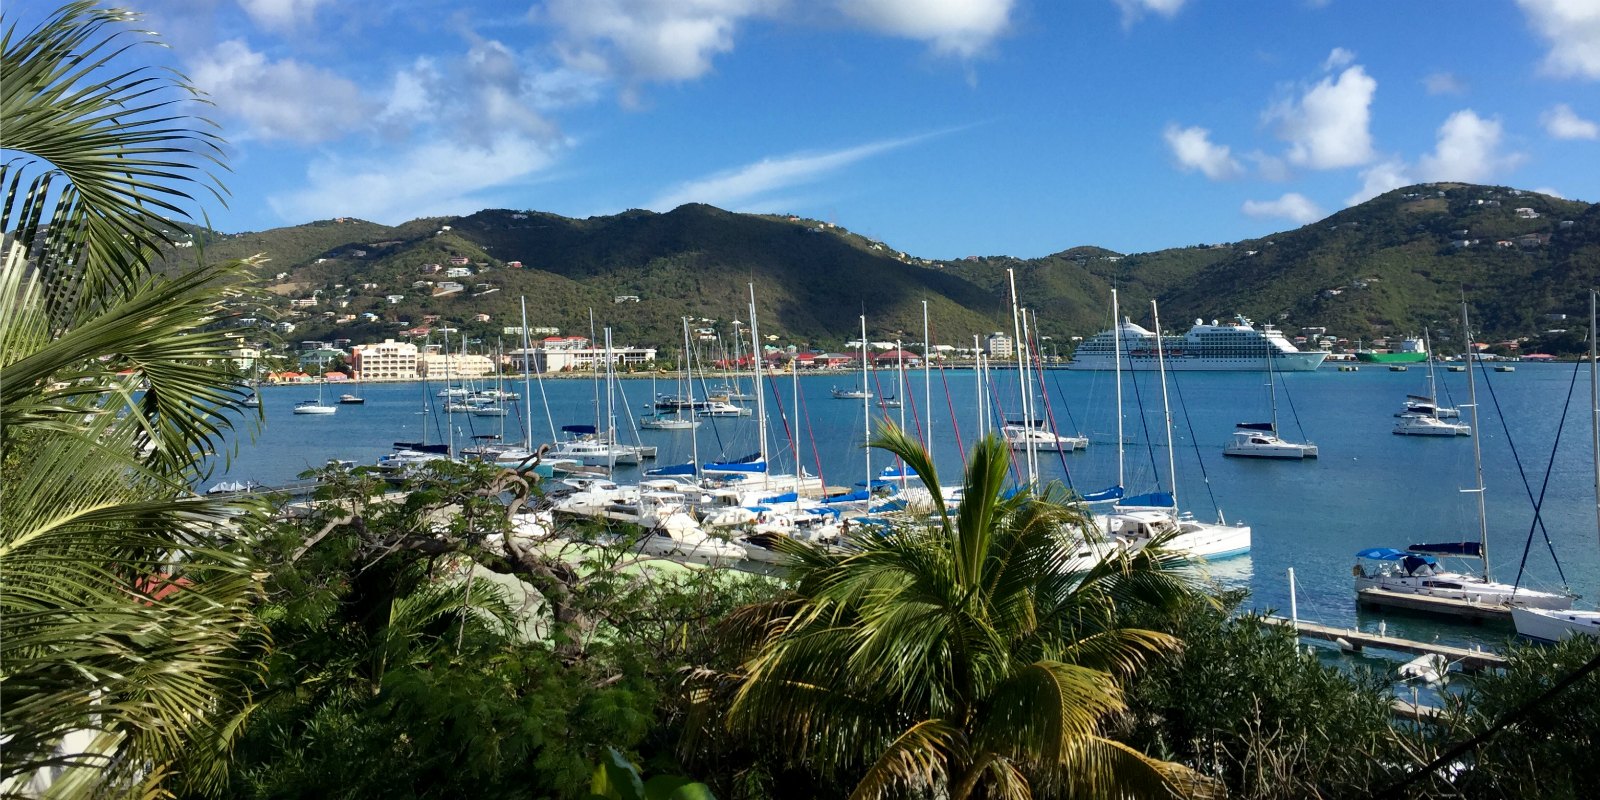 British Virgin Islands' capital city, Road Town